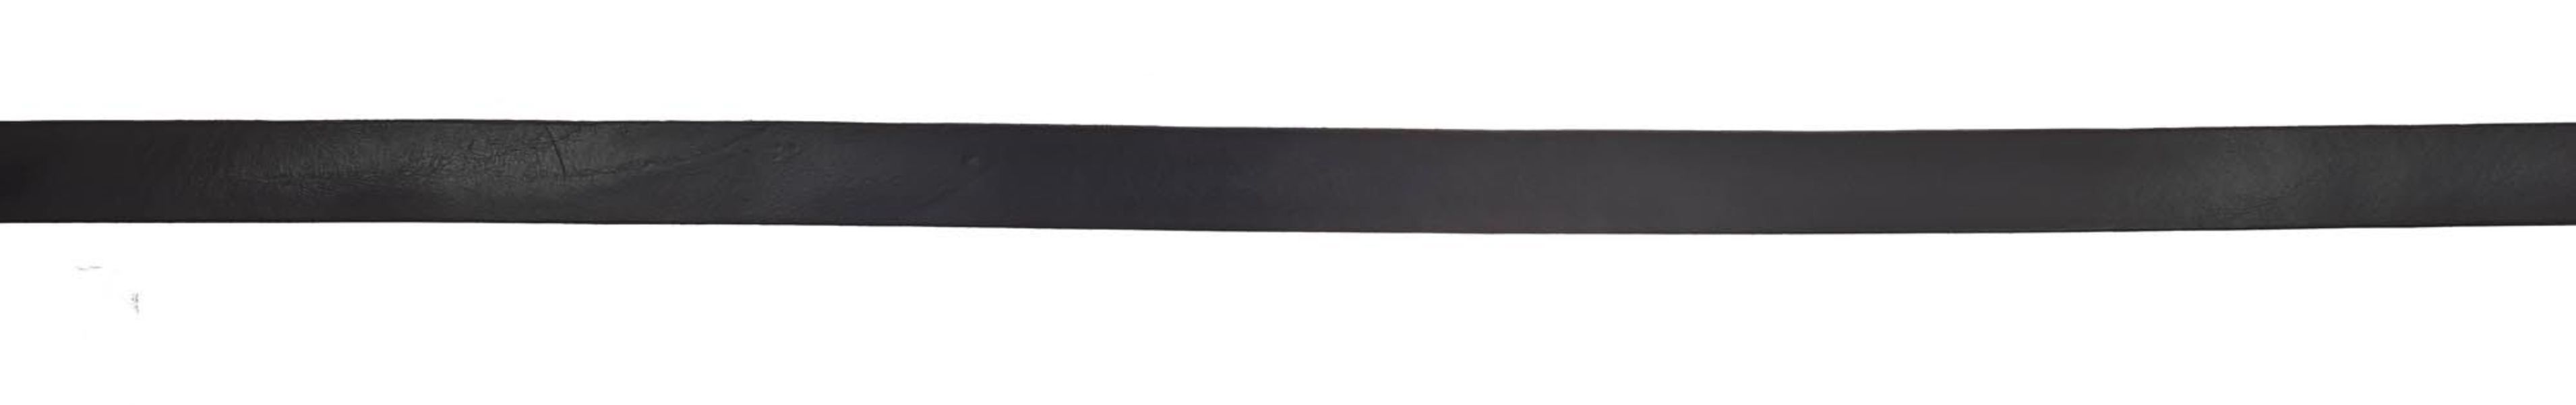 Vanzetti Ceinture en cuir avec boucle en métal - noir (0790)